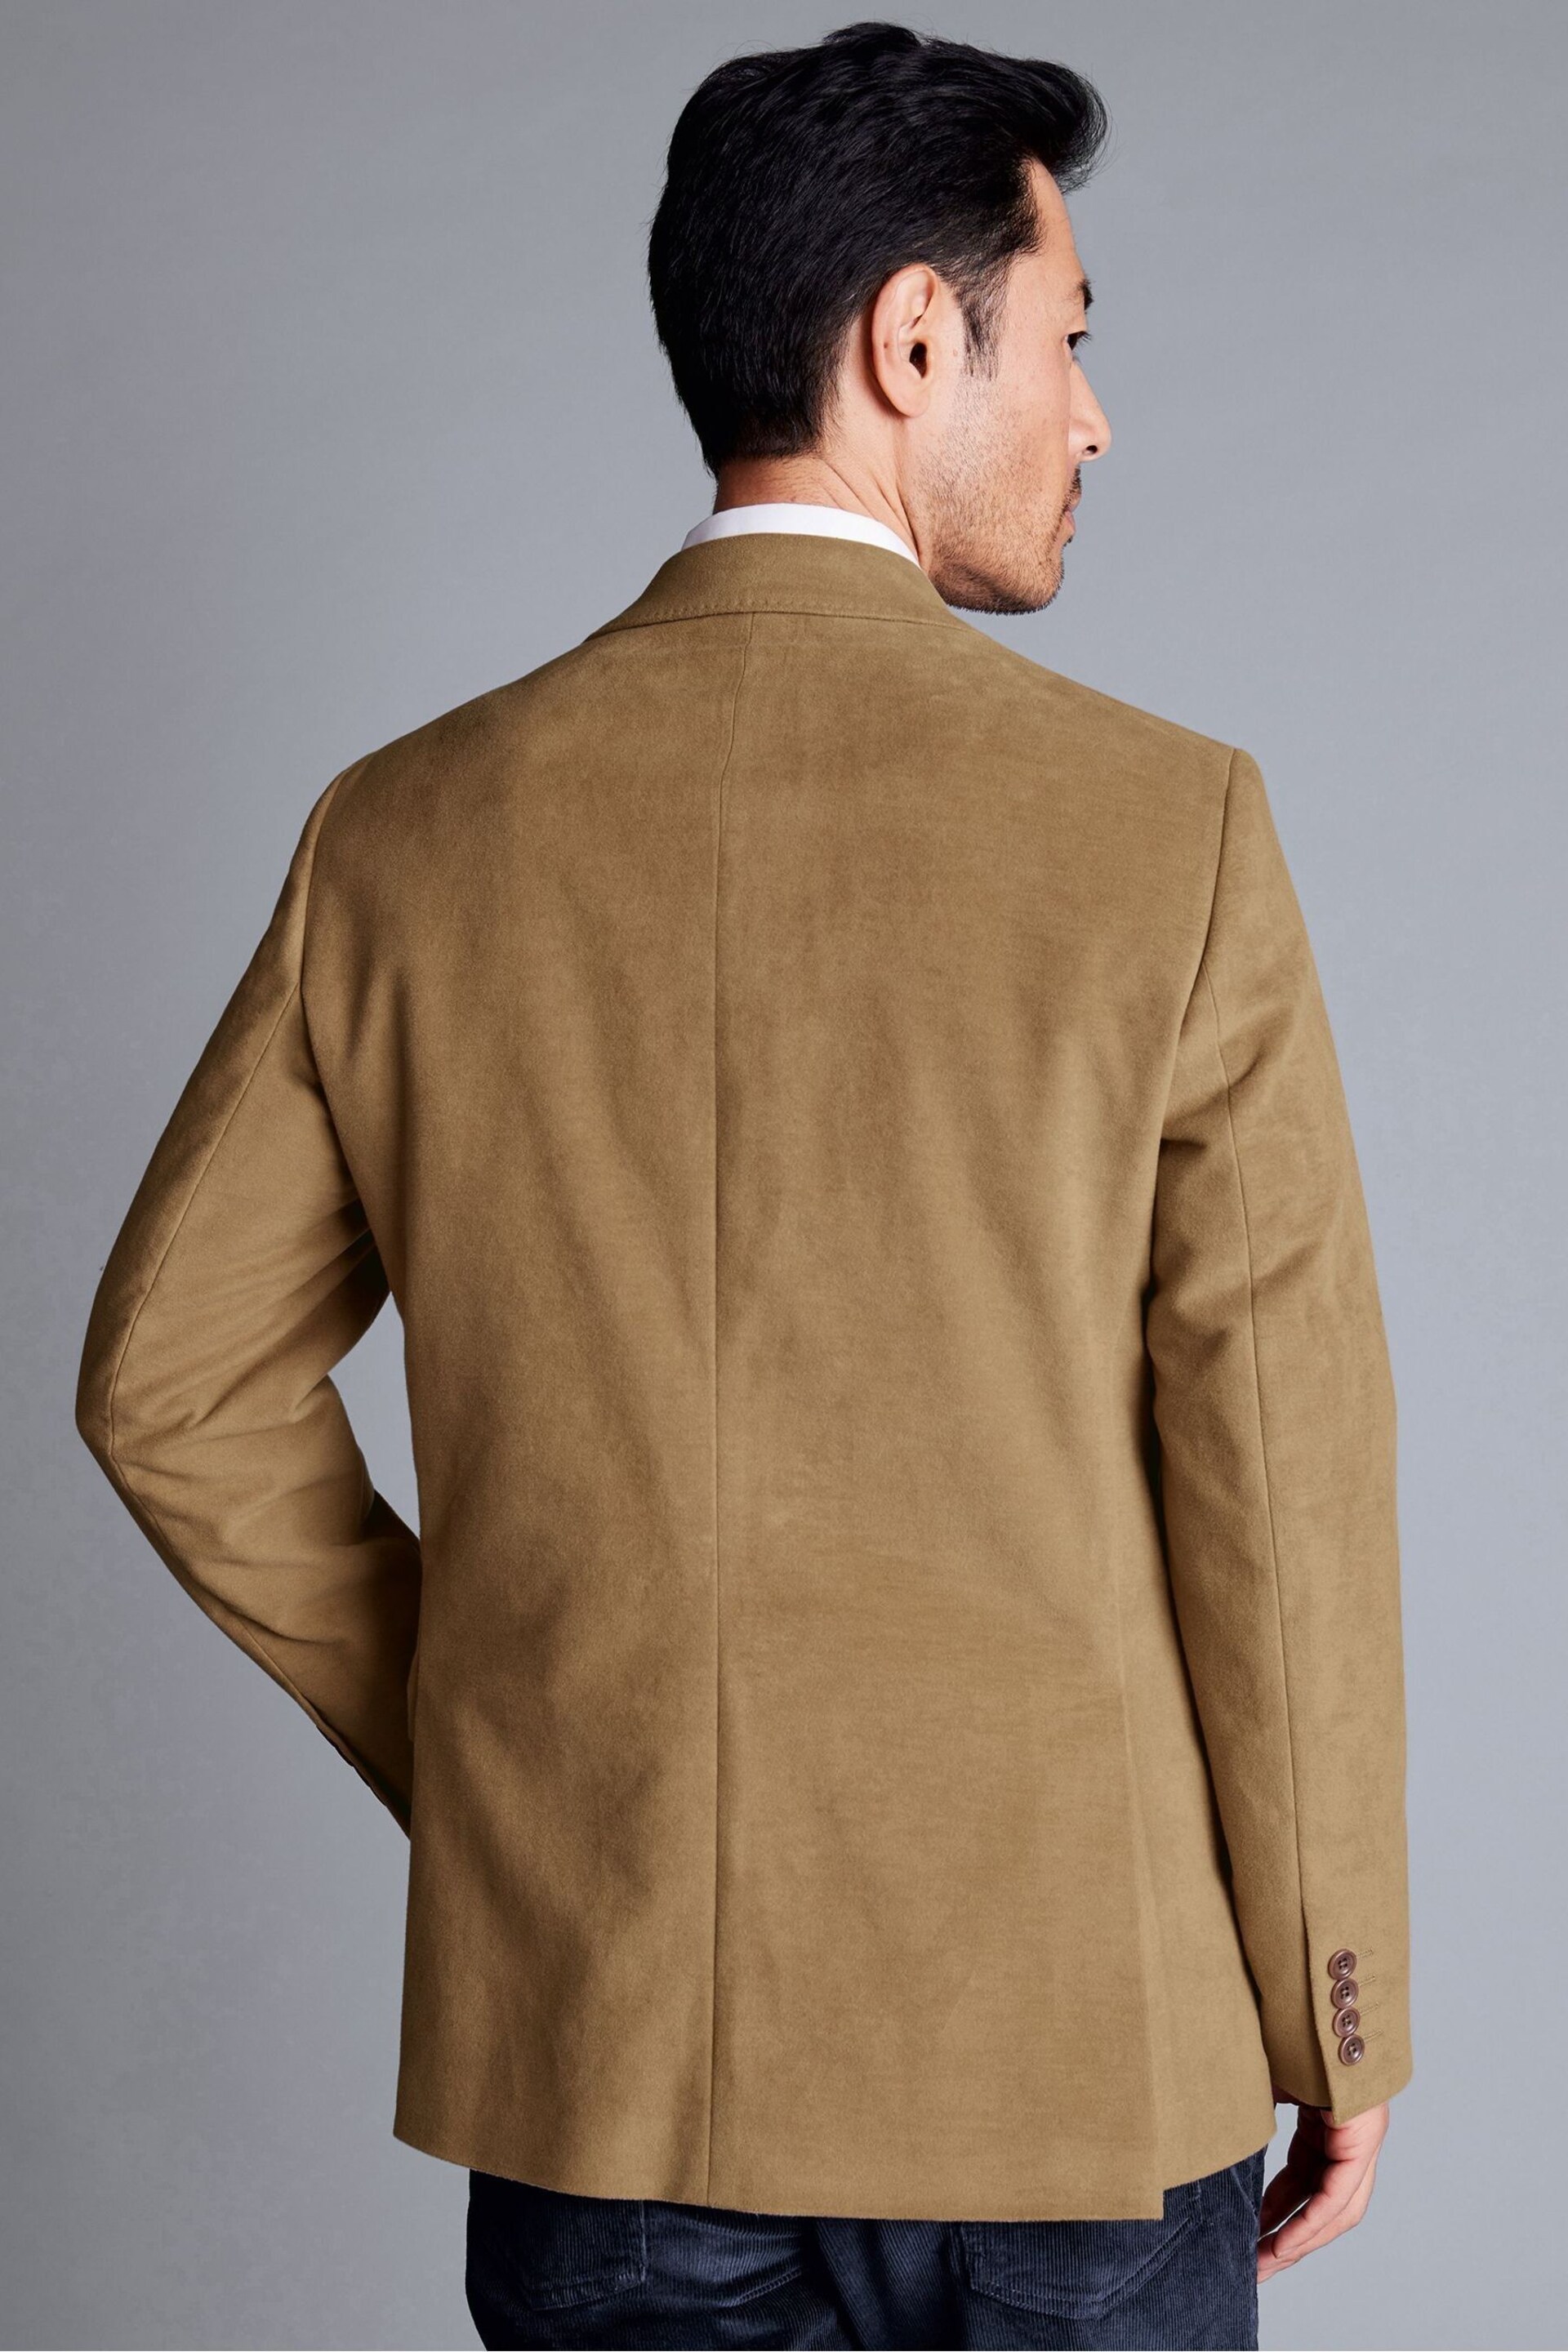 Charles Tyrwhitt Natural Tan Italian Moleskin Classic Fit Jacket - Image 2 of 6